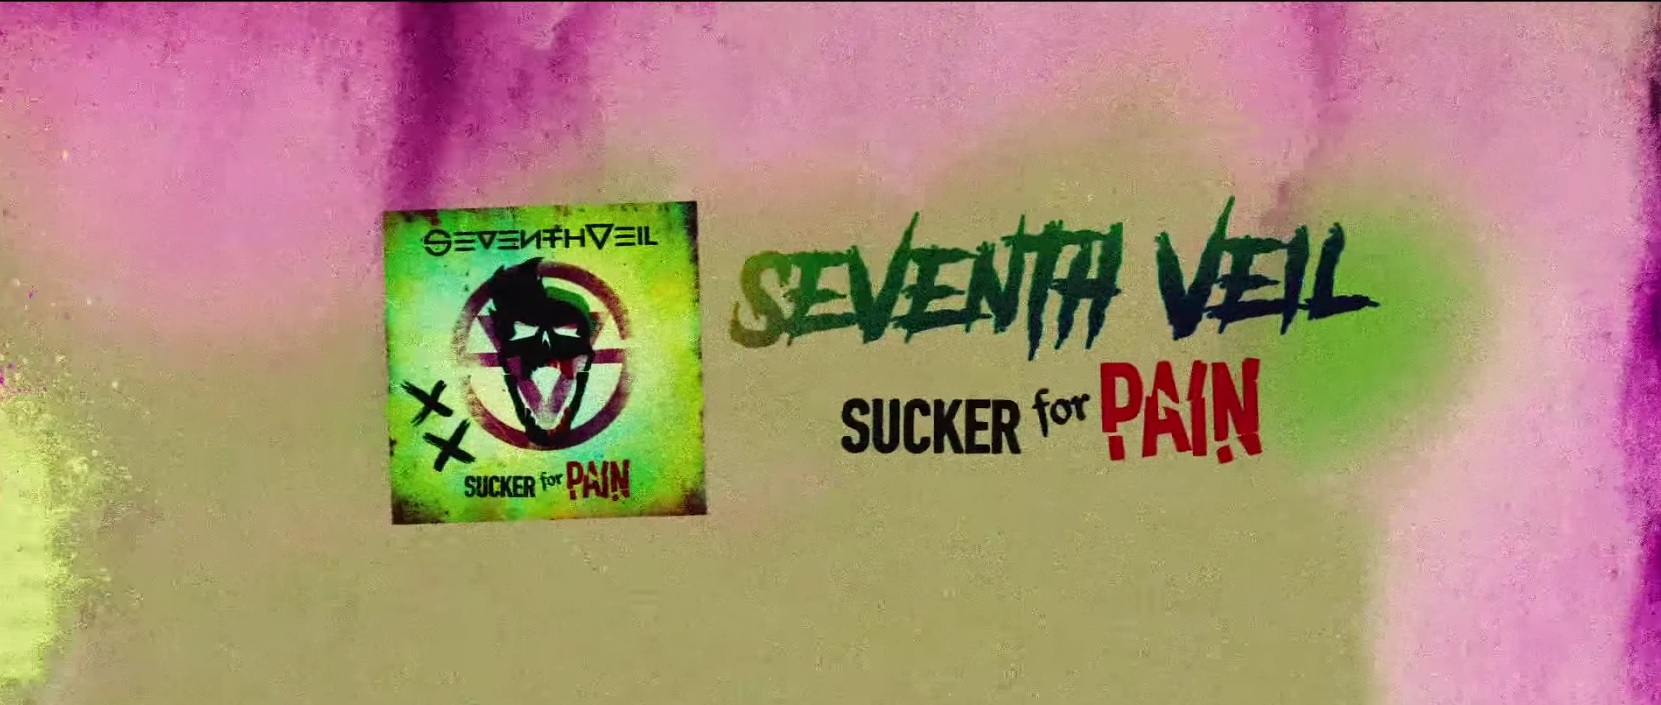 seventh-veil-sucker-for-pain